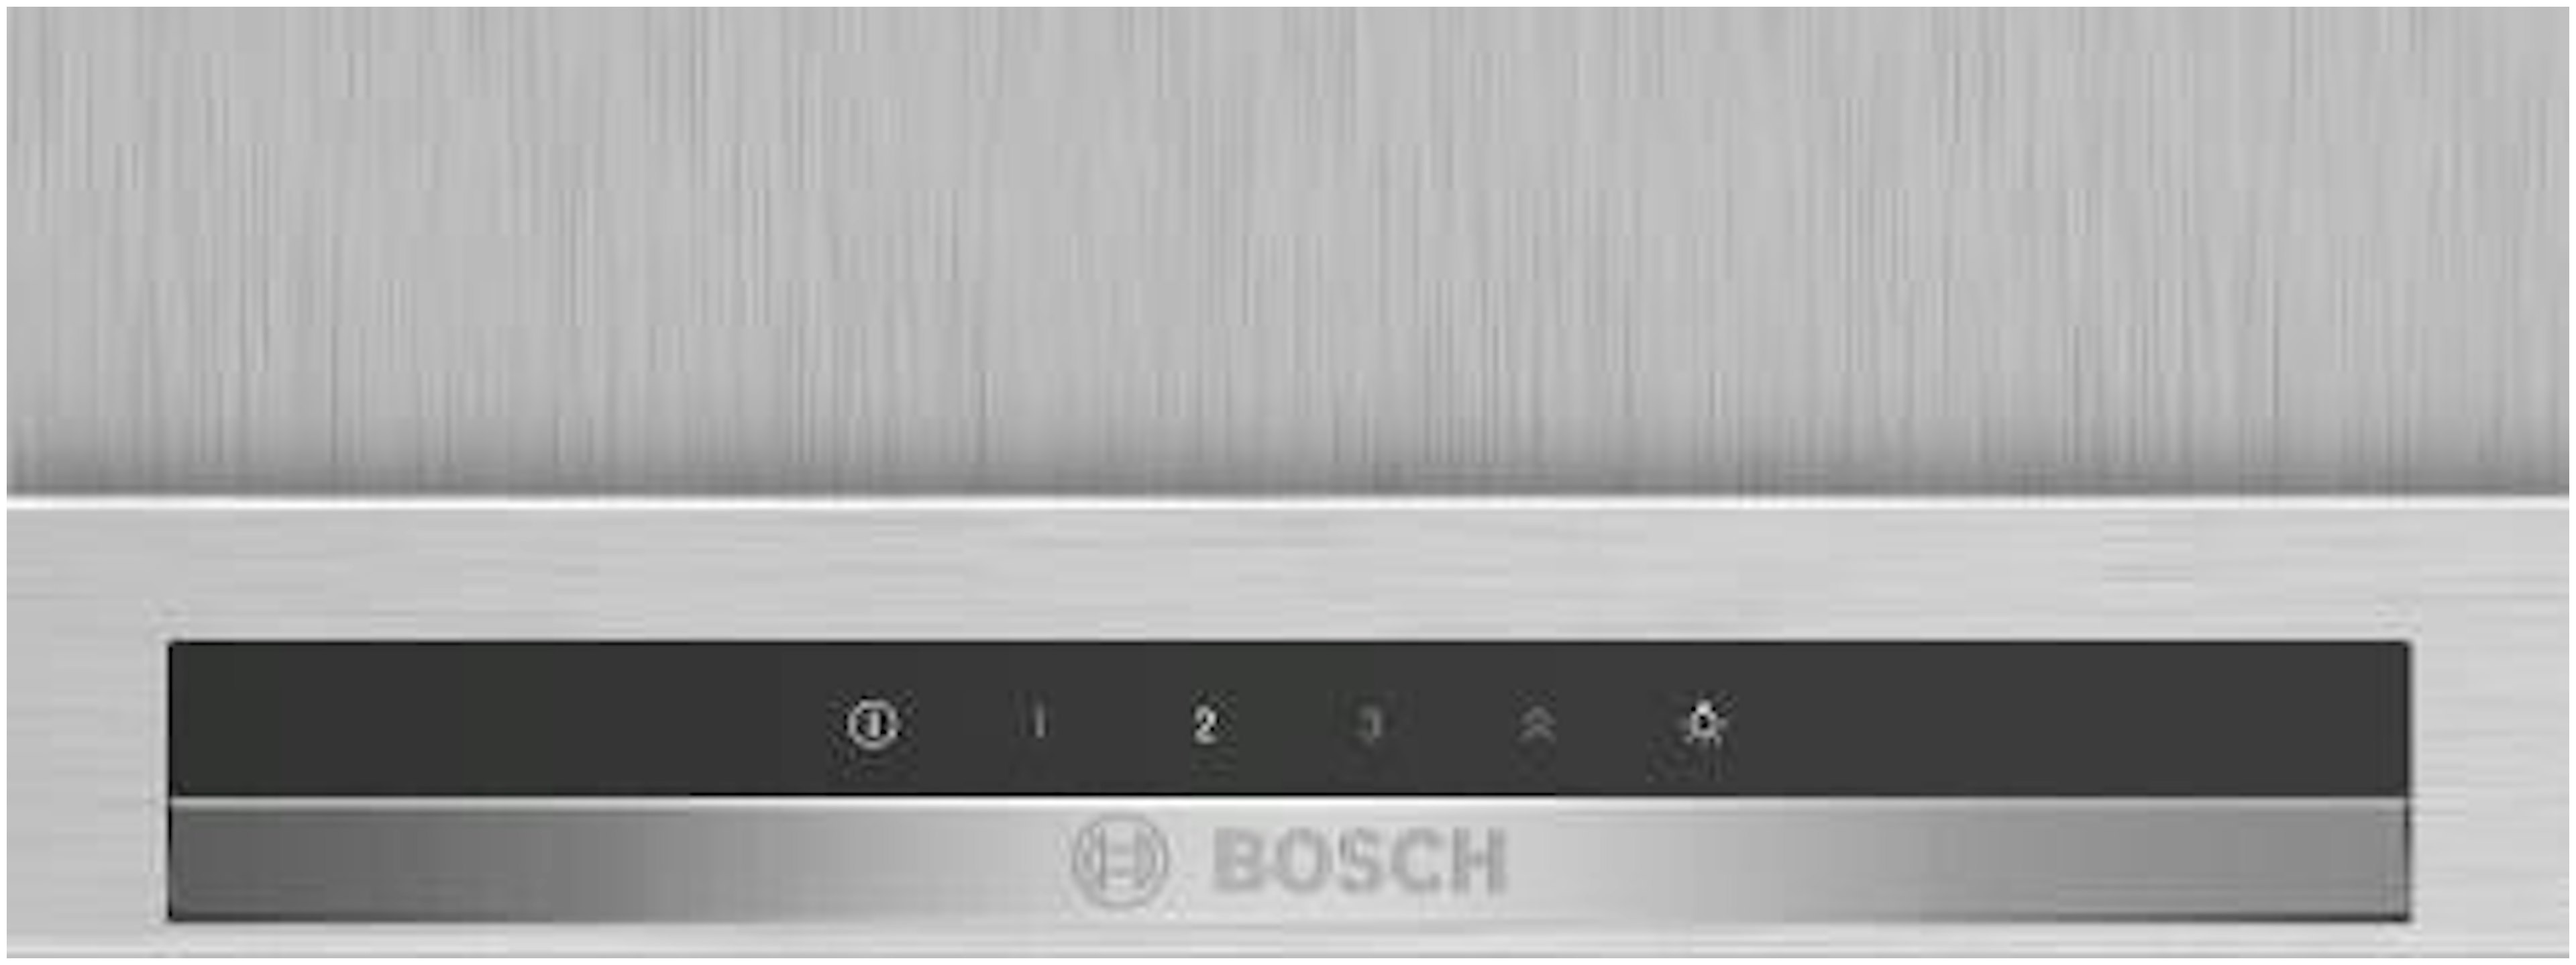 Bosch afzuigkap DIB97IM50 afbeelding 3